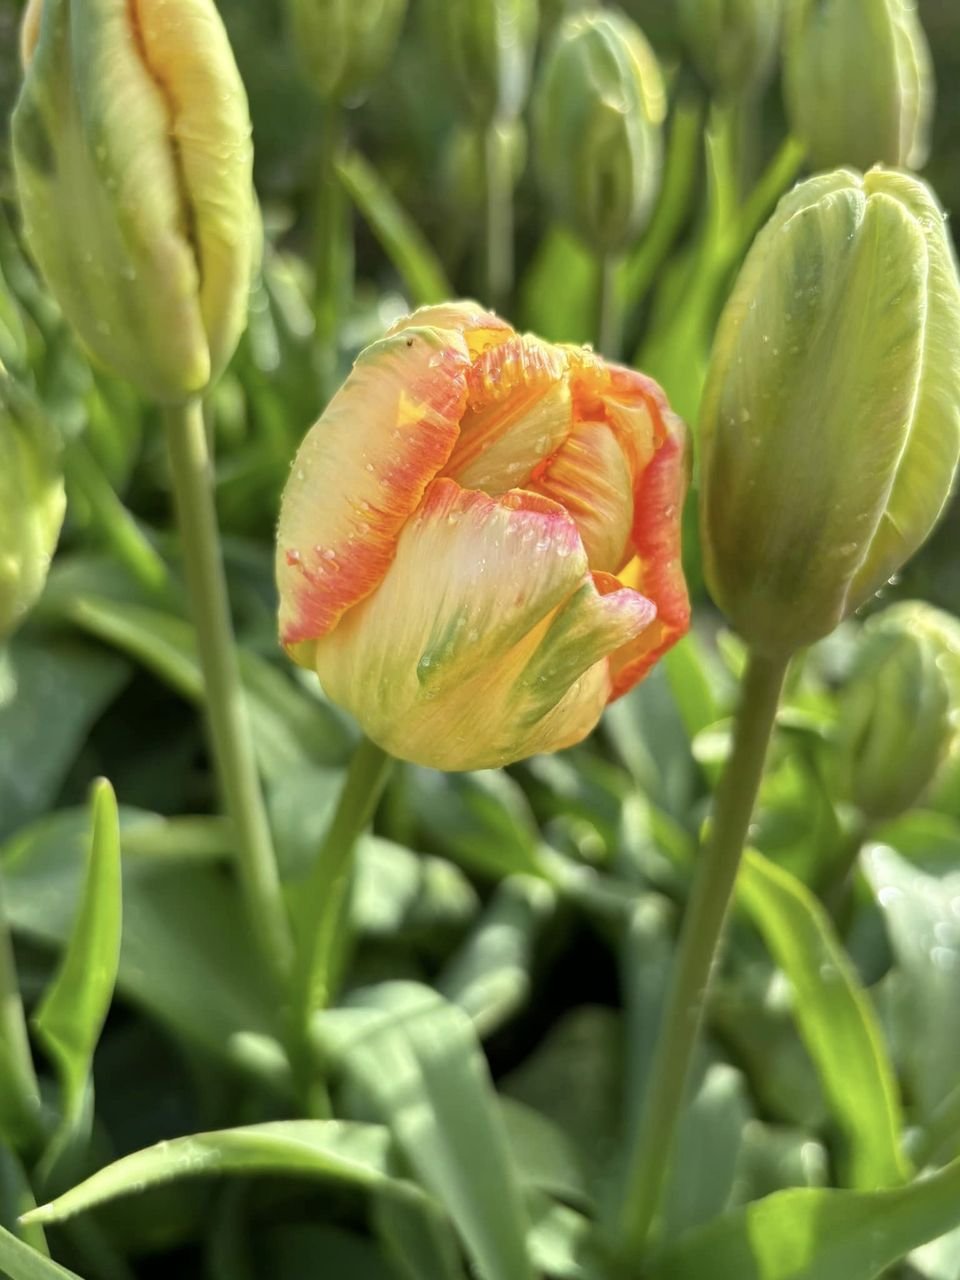 Tulips Tulips Tulips! — Cumberland Flower Farm